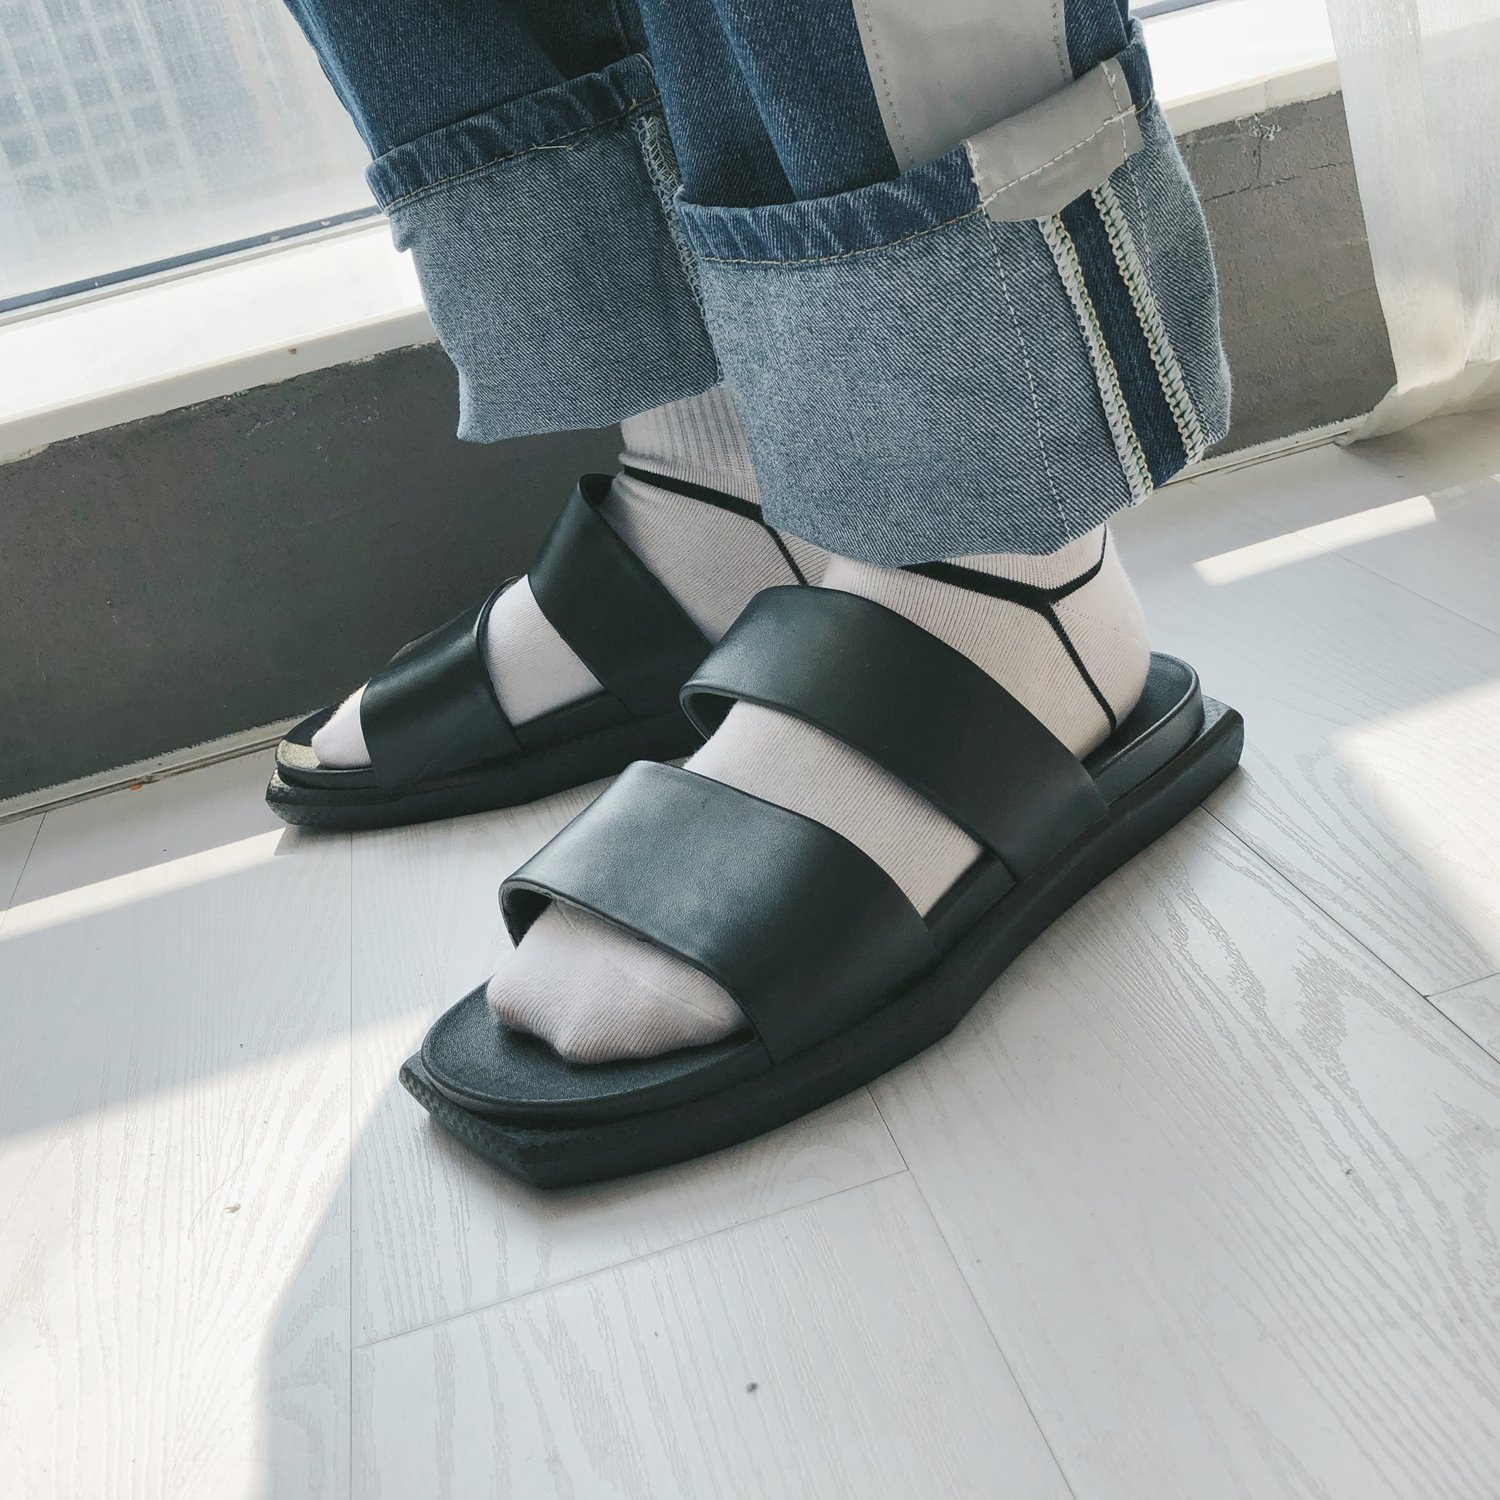 FINDSENSE品牌 2019新款 日本 情侶 高品質 真皮 簡約 方形鞋底 雙杠兩條 時尚 涼鞋 休閒鞋 潮流鞋子